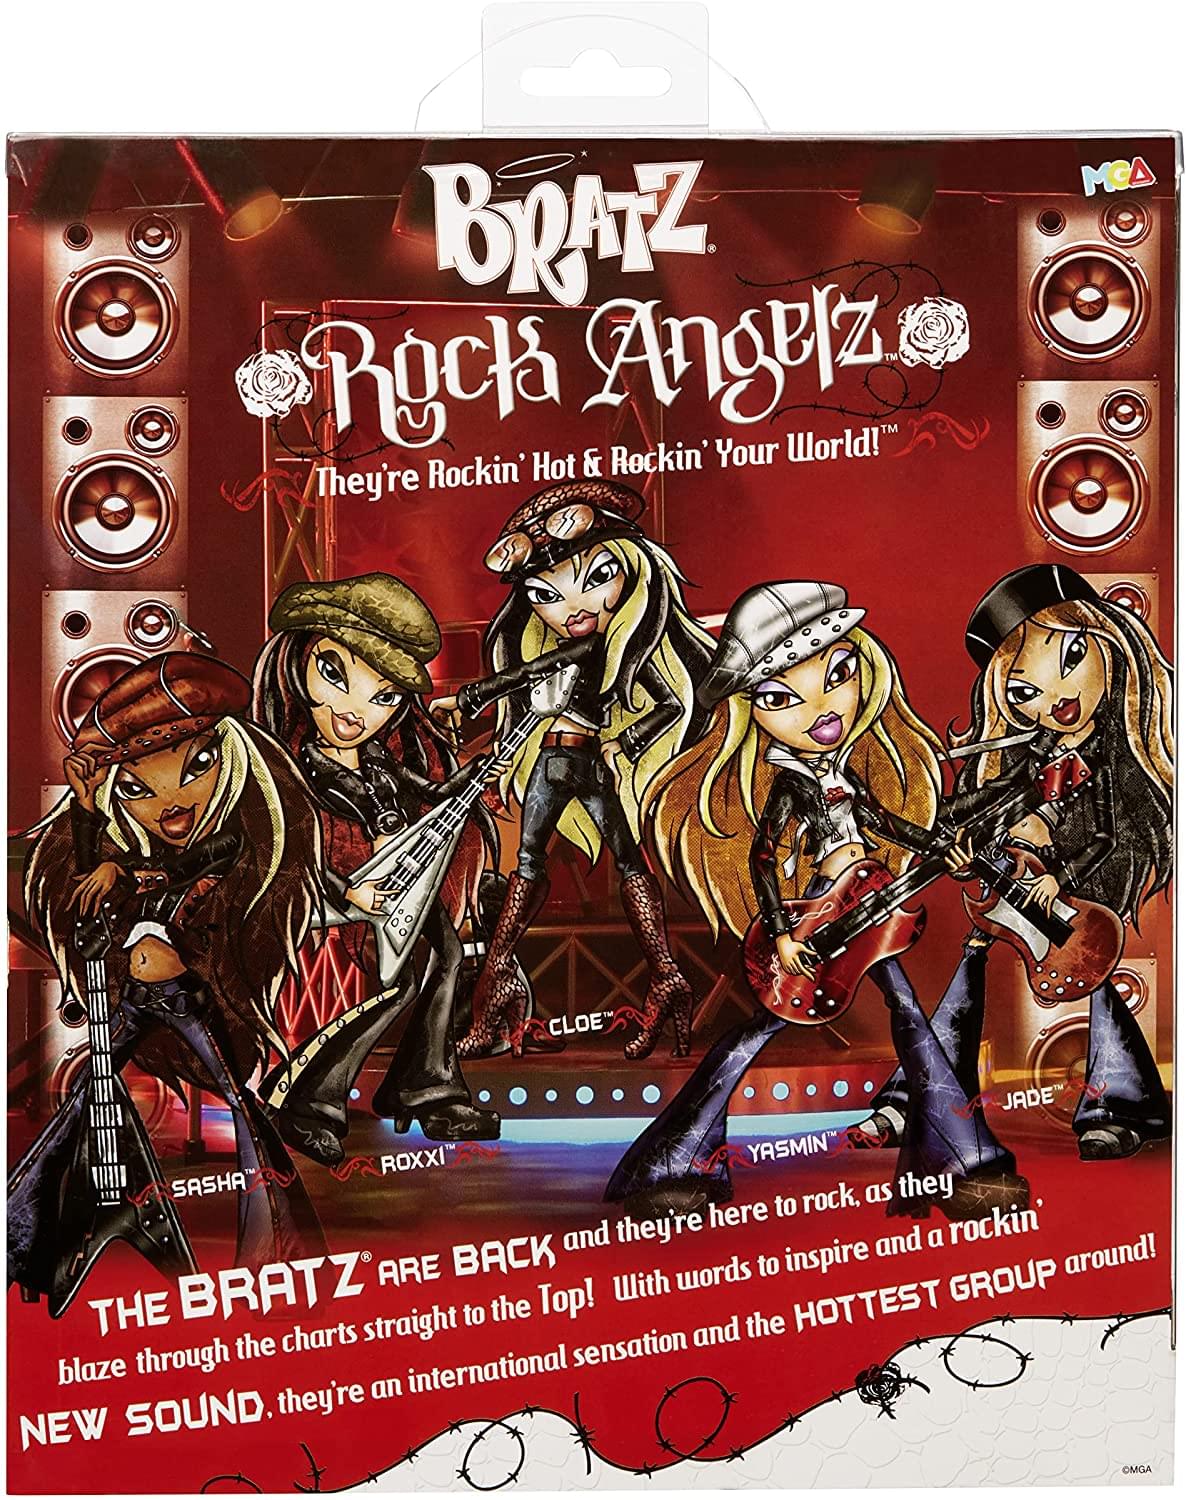 Bratz Rock Angelz 20 Yearz Special Edition Dolls: What We Know So